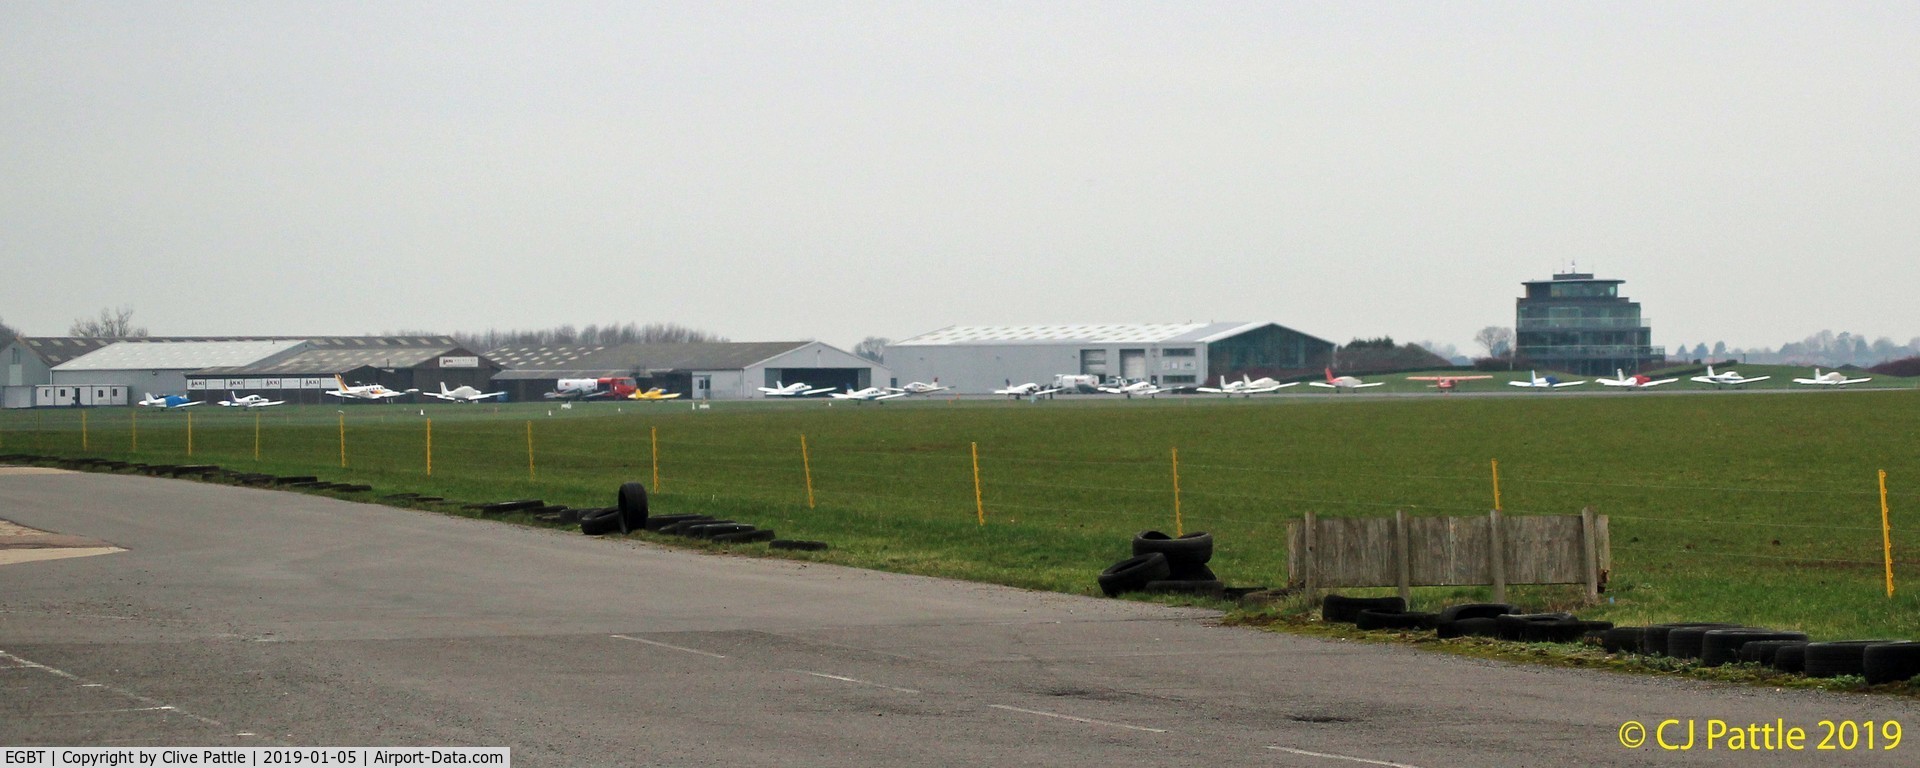 Turweston Aerodrome Airport, Turweston, England United Kingdom (EGBT) - Airfield view